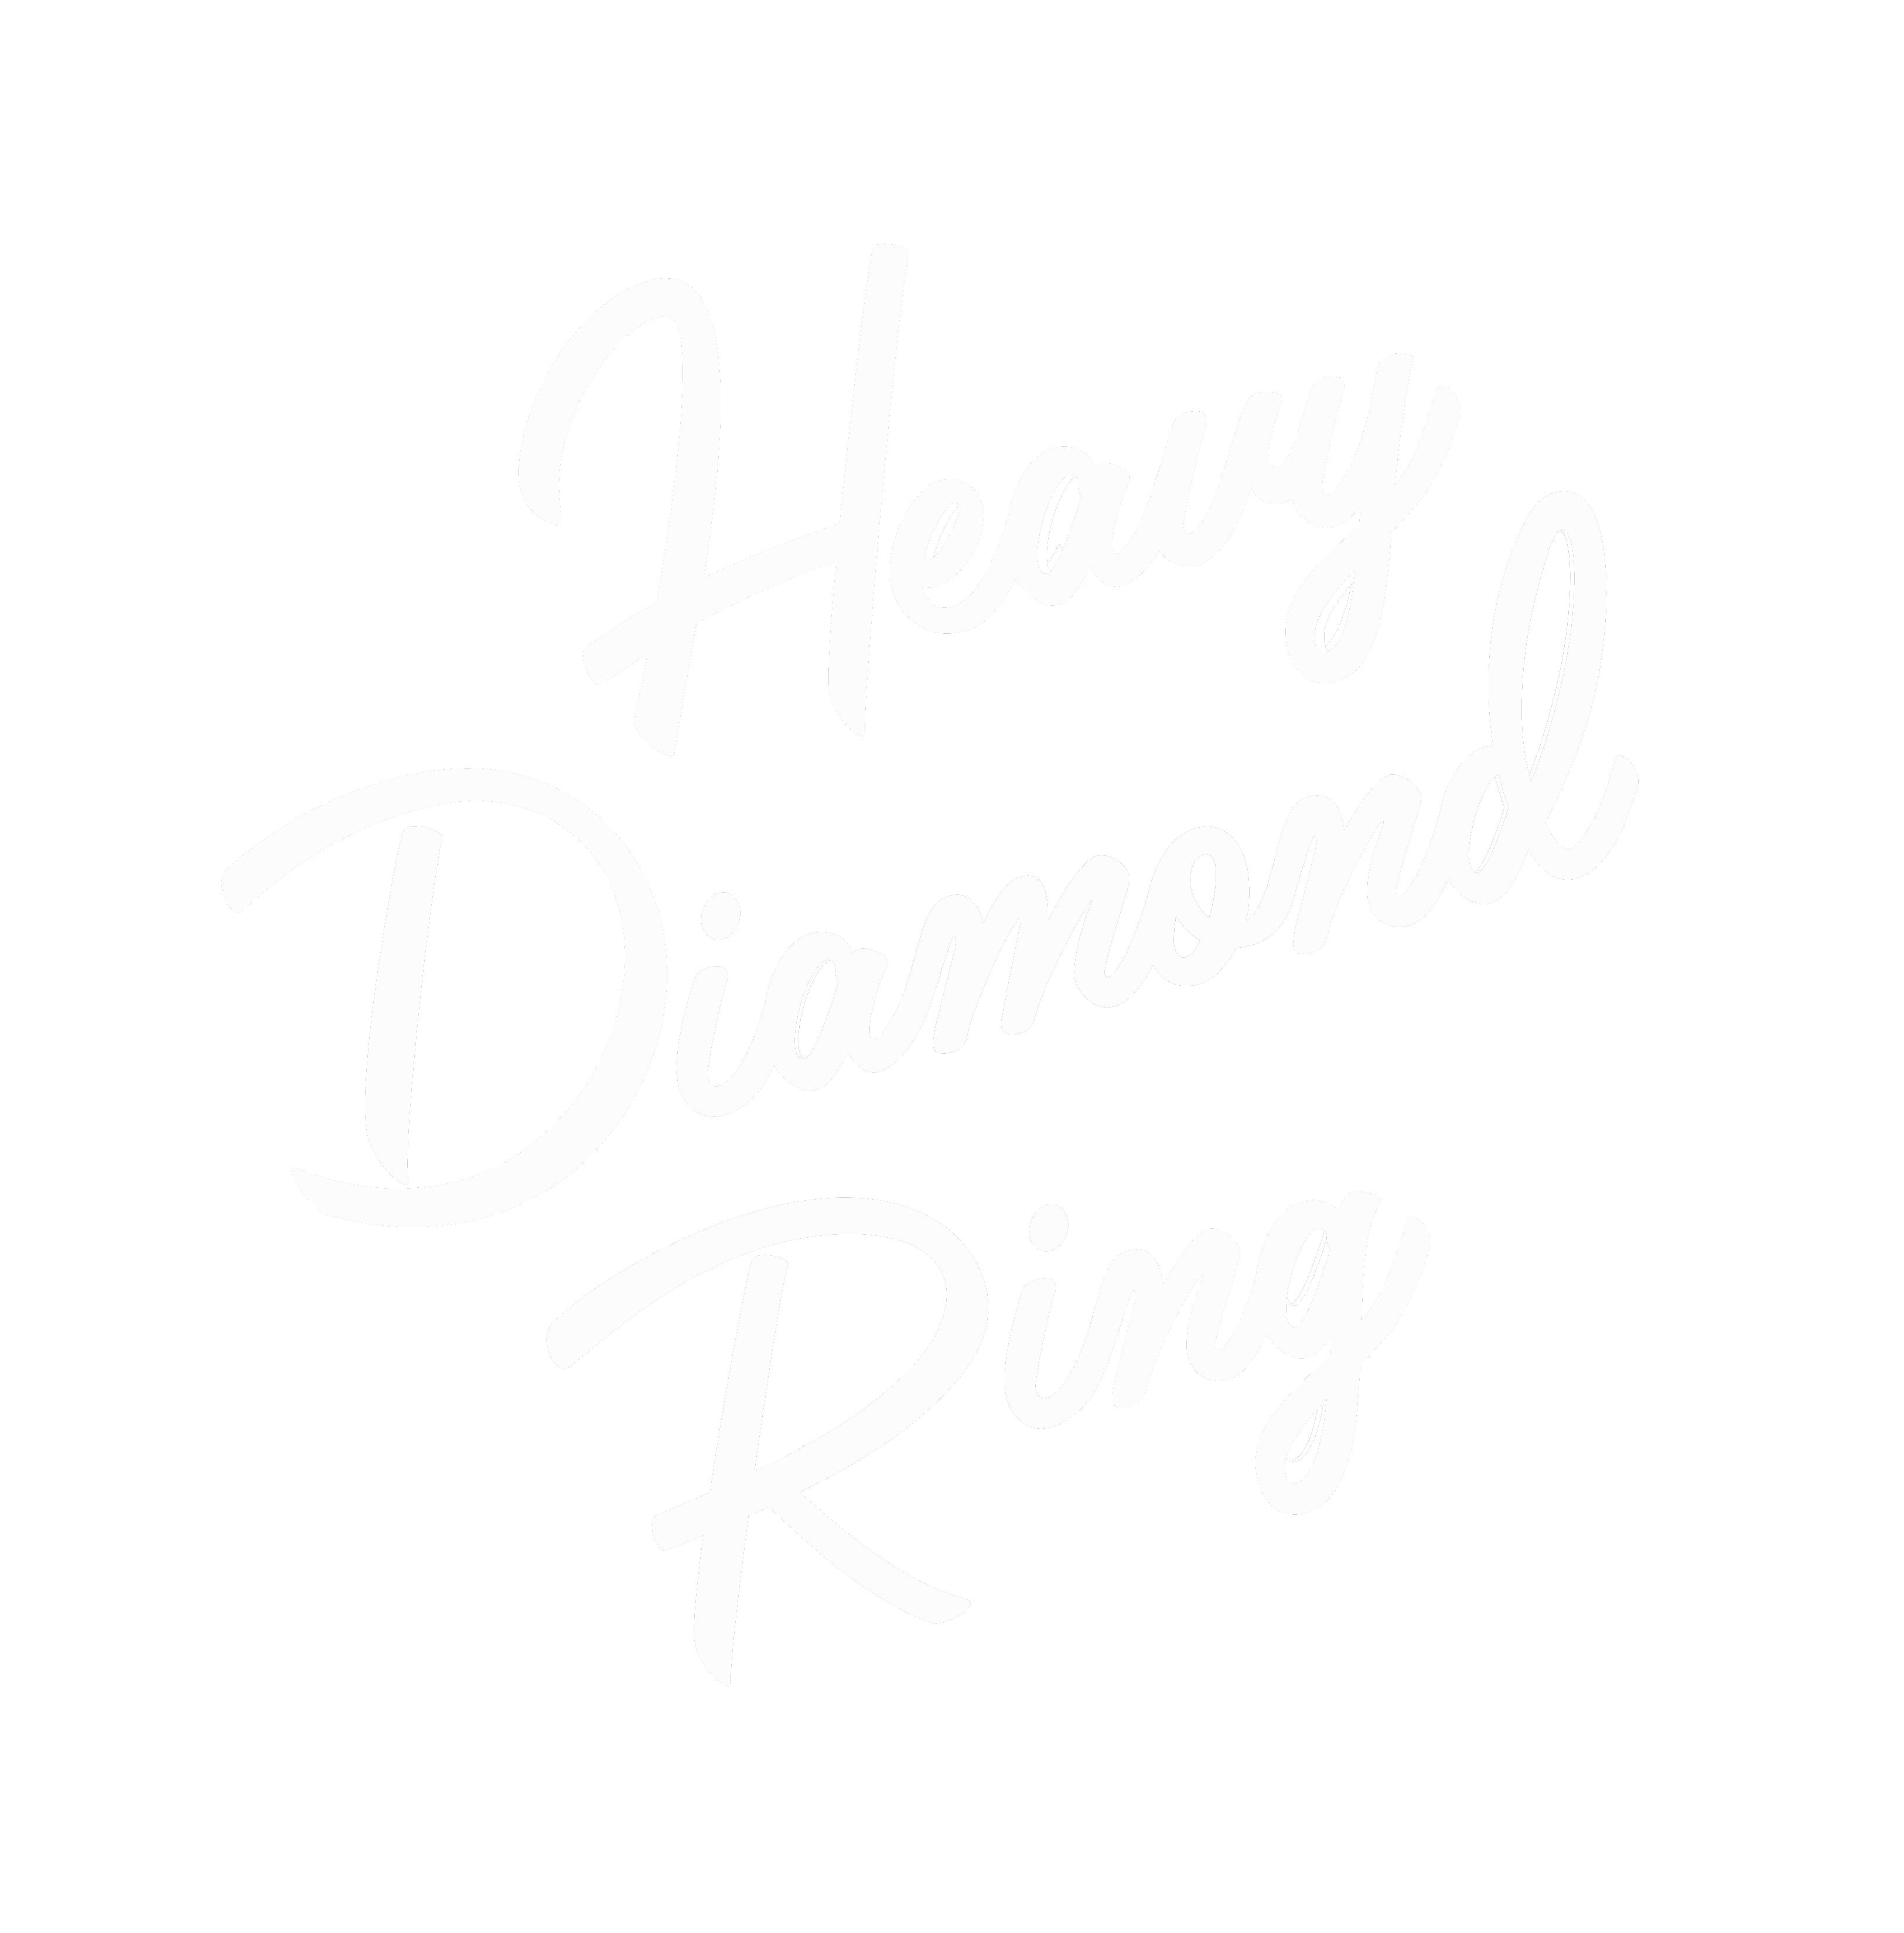 HEAVY DIAMOND RING